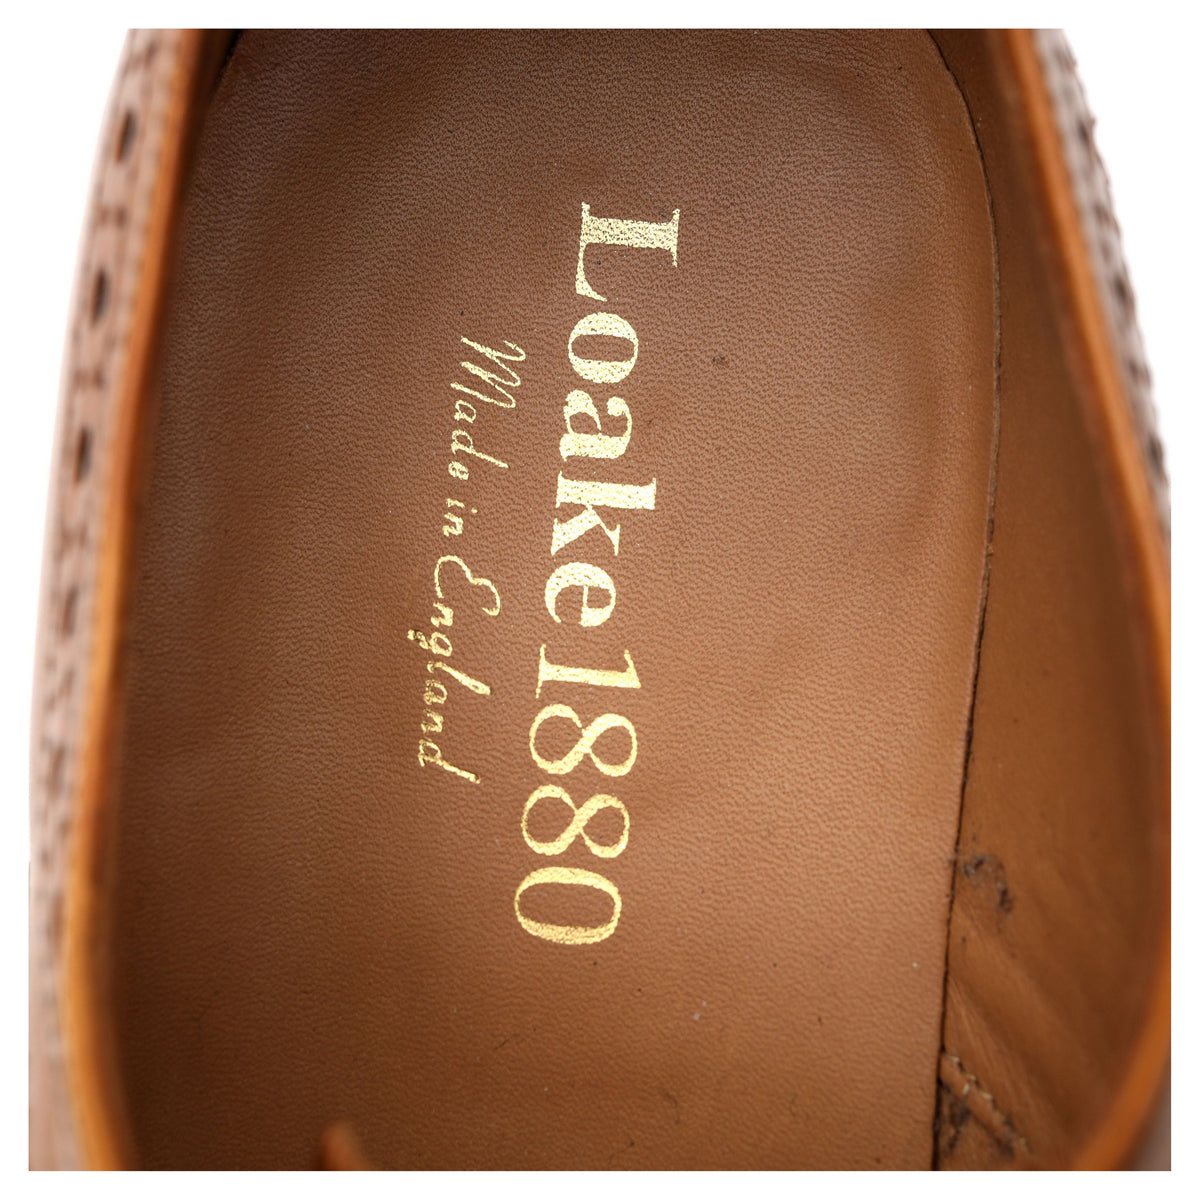 1880 &#39;Edward&#39; Tan Brown Leather Brogues UK 8.5 G